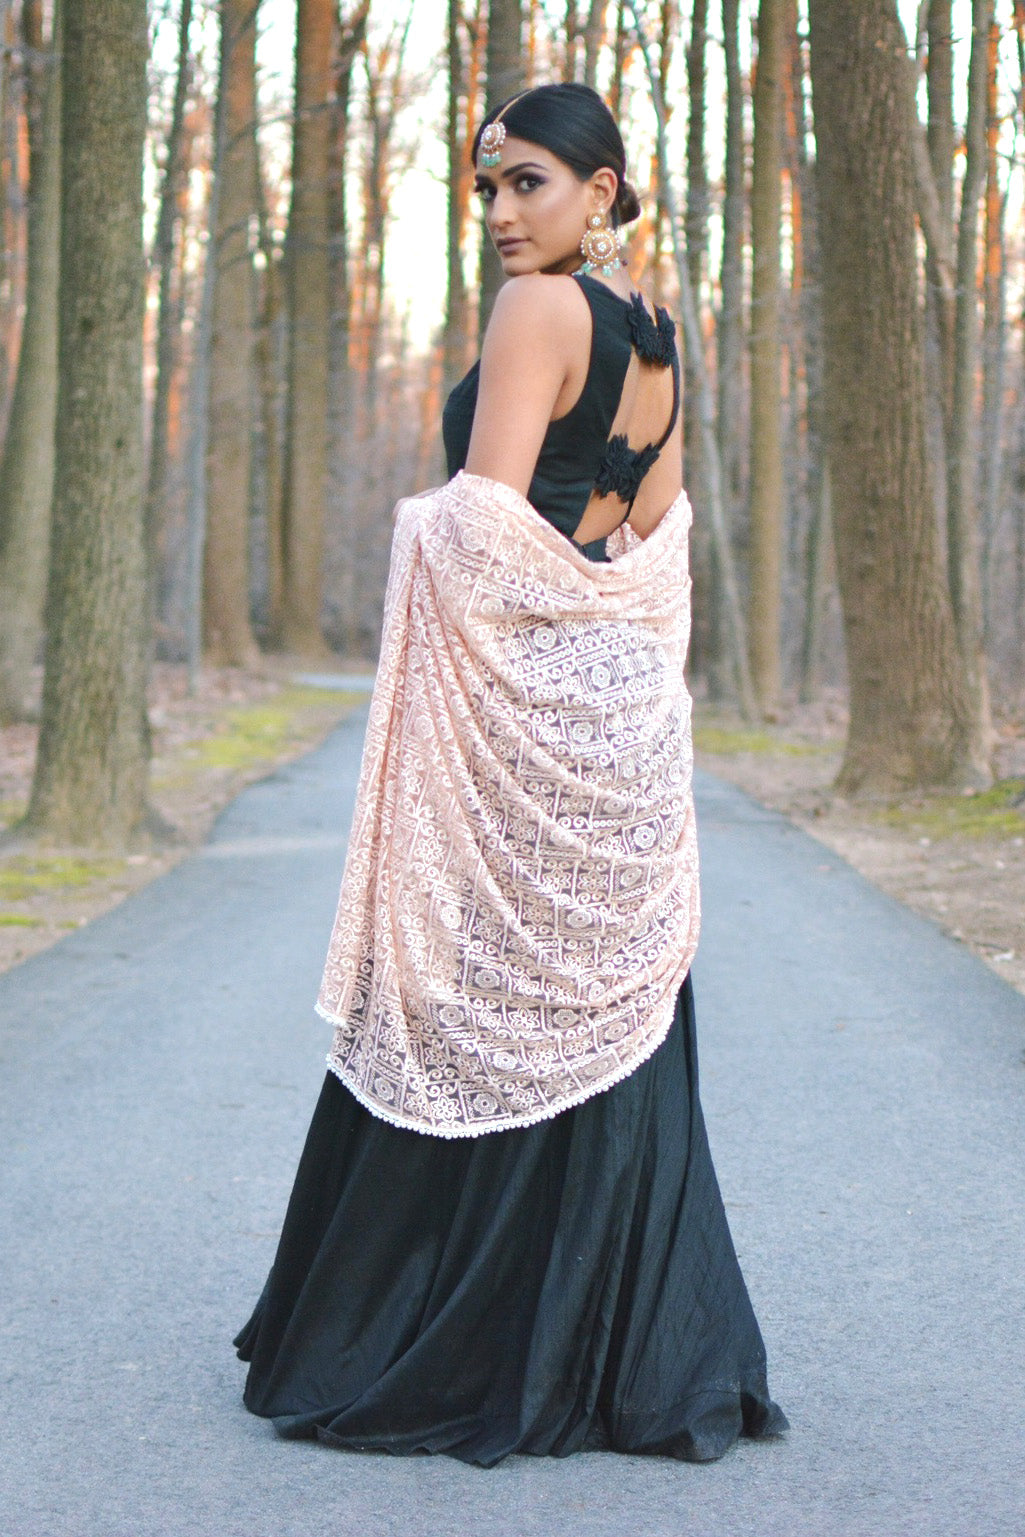 SARINA Floor Length Silk Dress in Black - Back View - Harleen Kaur Womenswear - Sample Sale